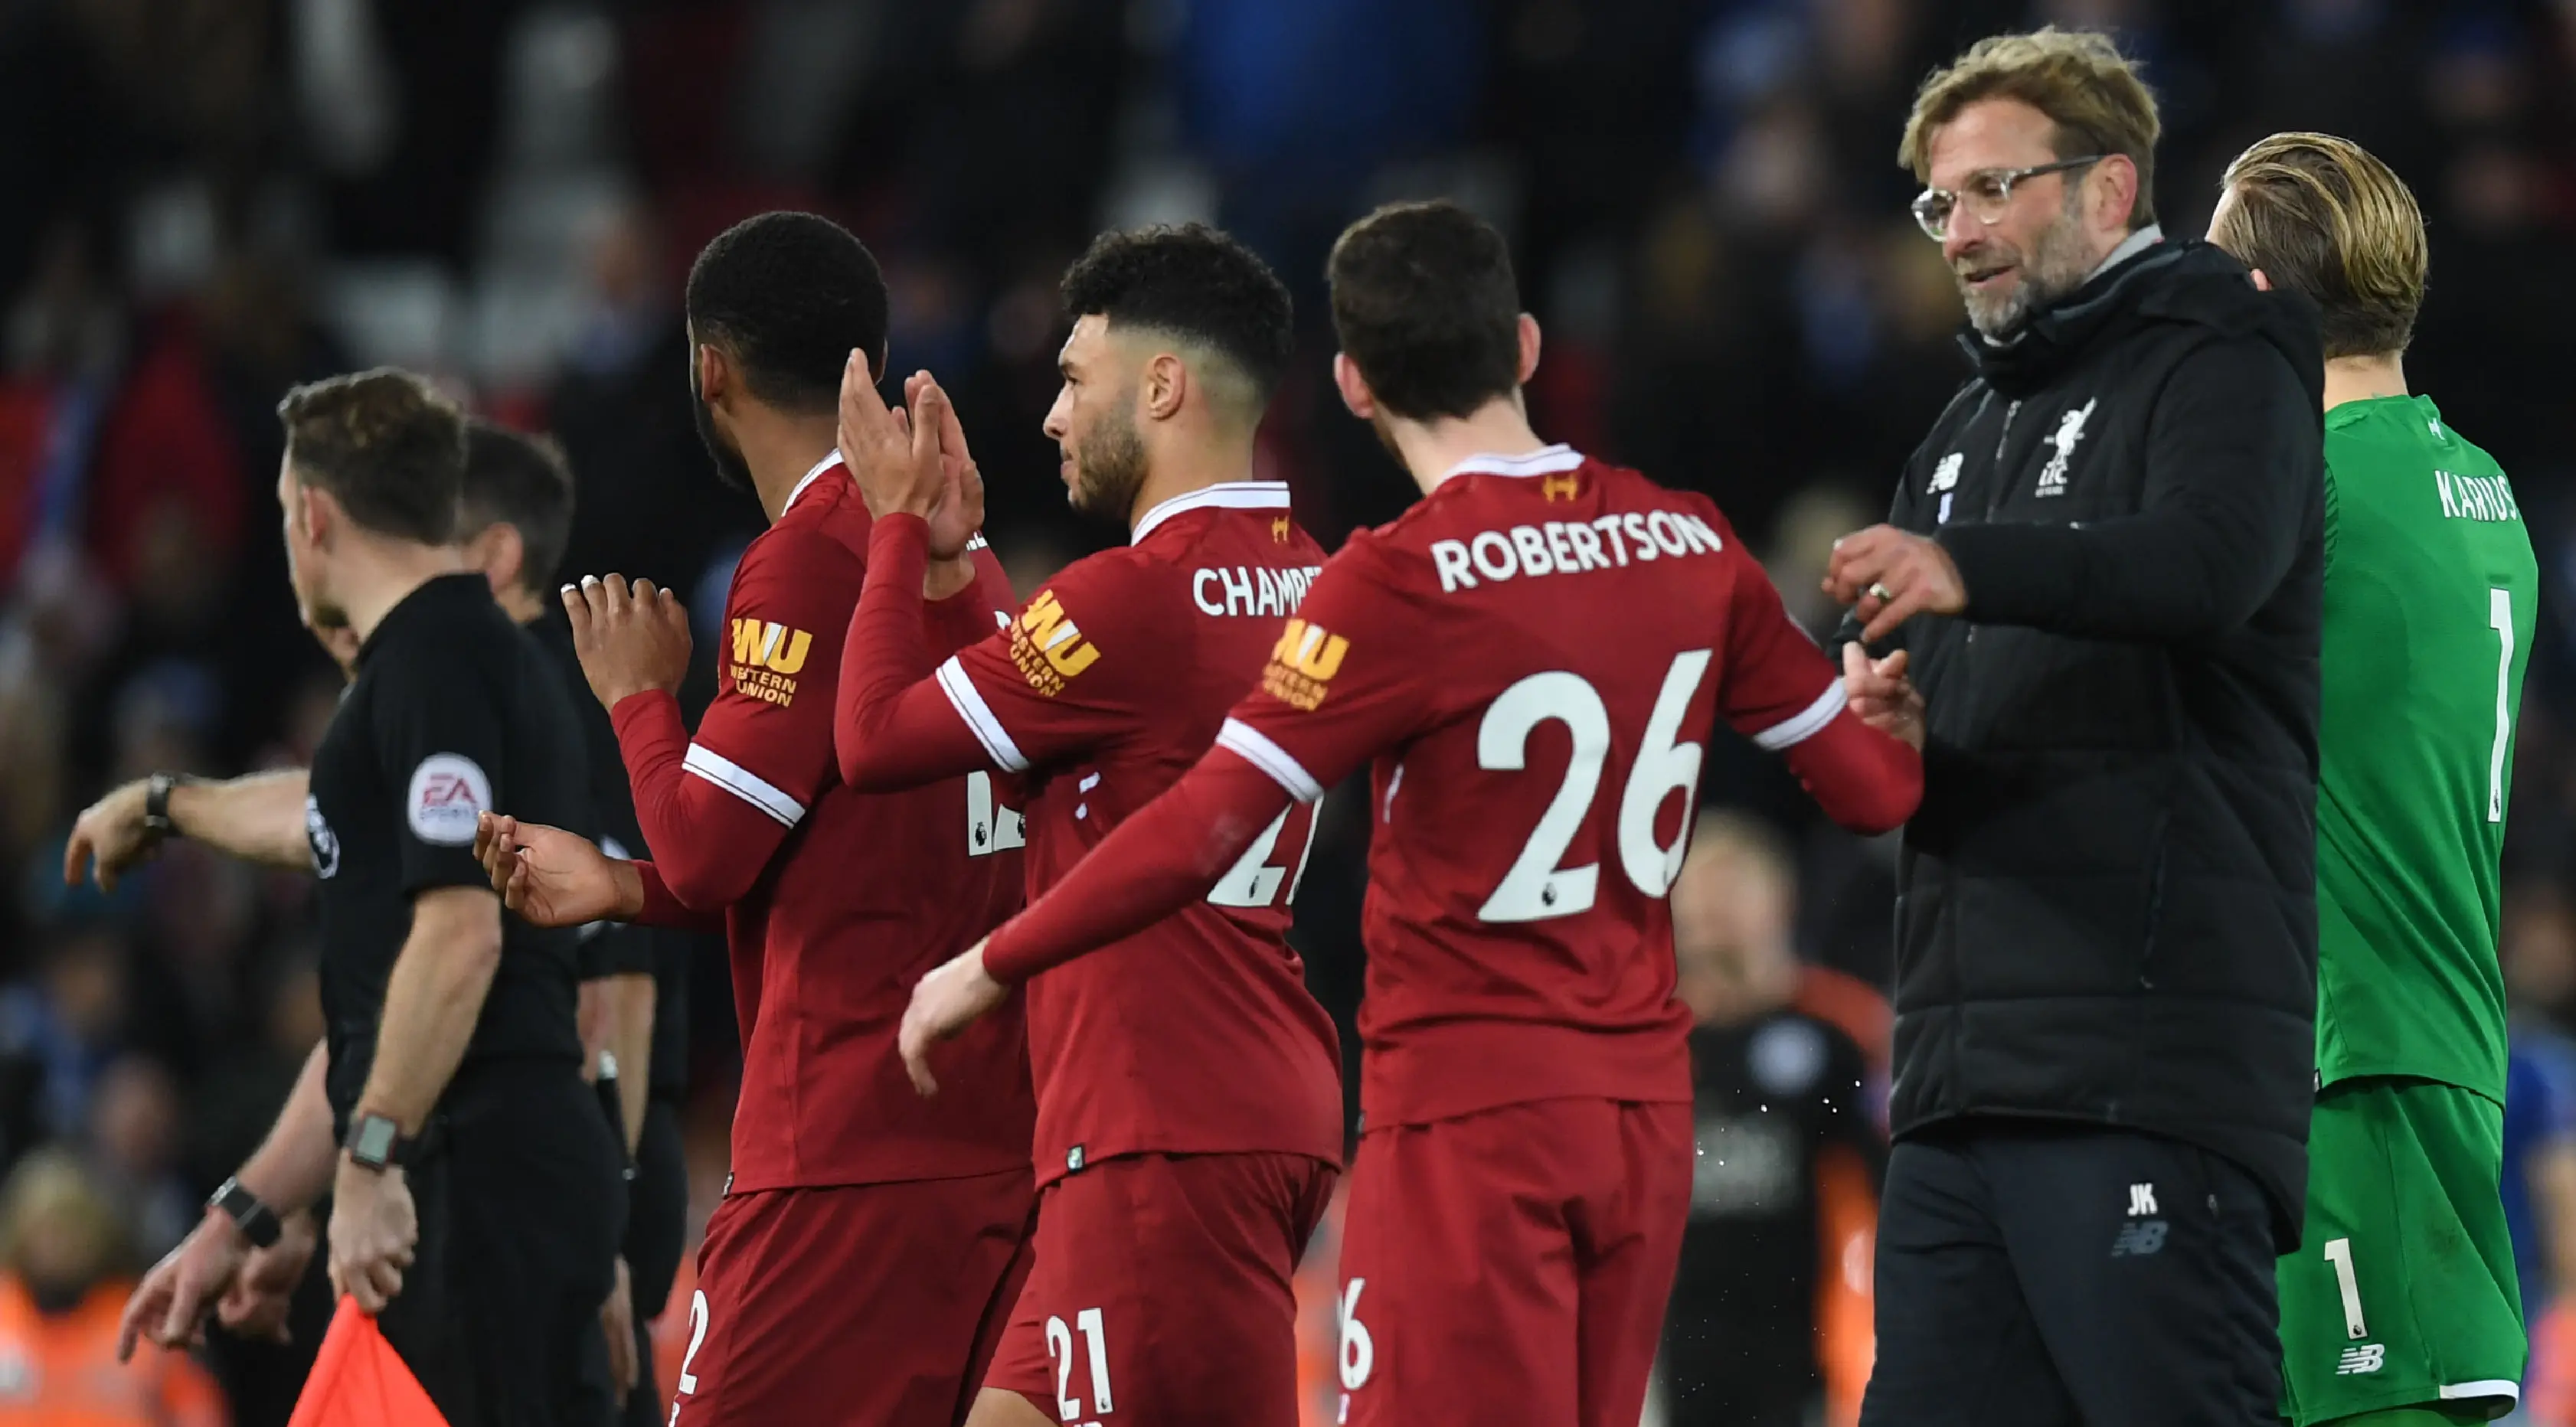 Manajer Liverpool, Jurgen Klopp mengucapkan selamat kepada timnya, Andrew Robertson seusai laga pekan ke-21 Premier League kontra Leicester City di Anfield, Sabtu (30/12). Liverpool menutup tahun 2017 dengan kemenangan 2-1. (Paul ELLIS / AFP)